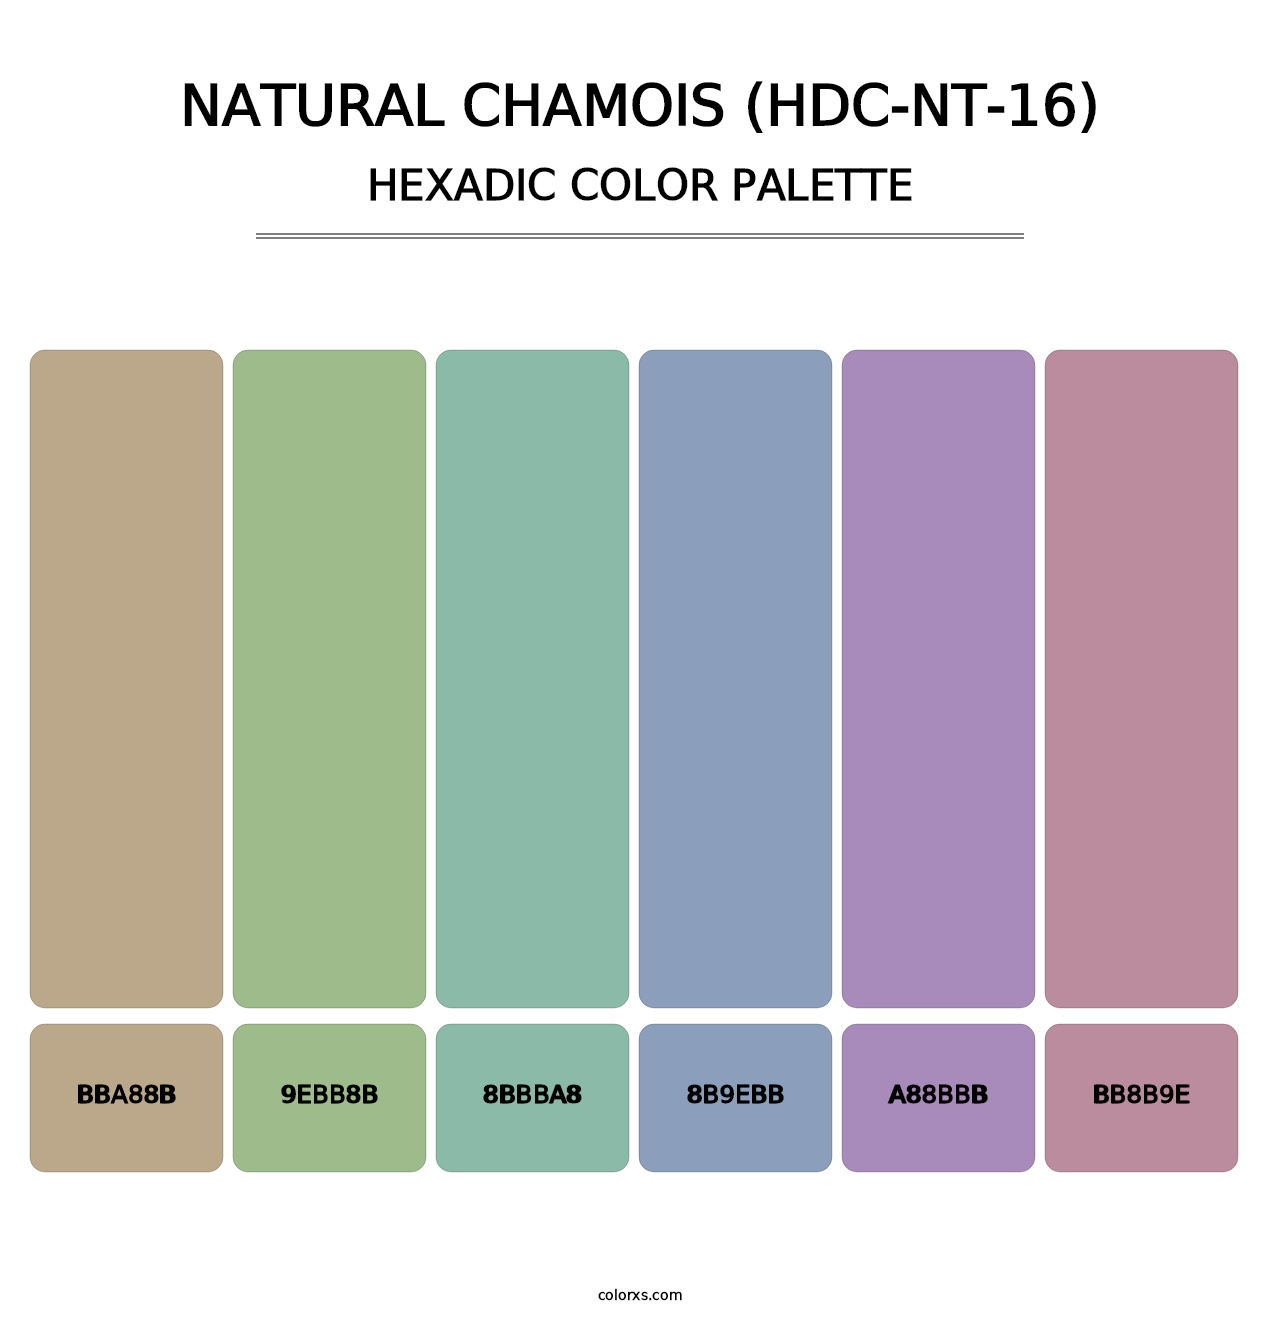 Natural Chamois (HDC-NT-16) - Hexadic Color Palette